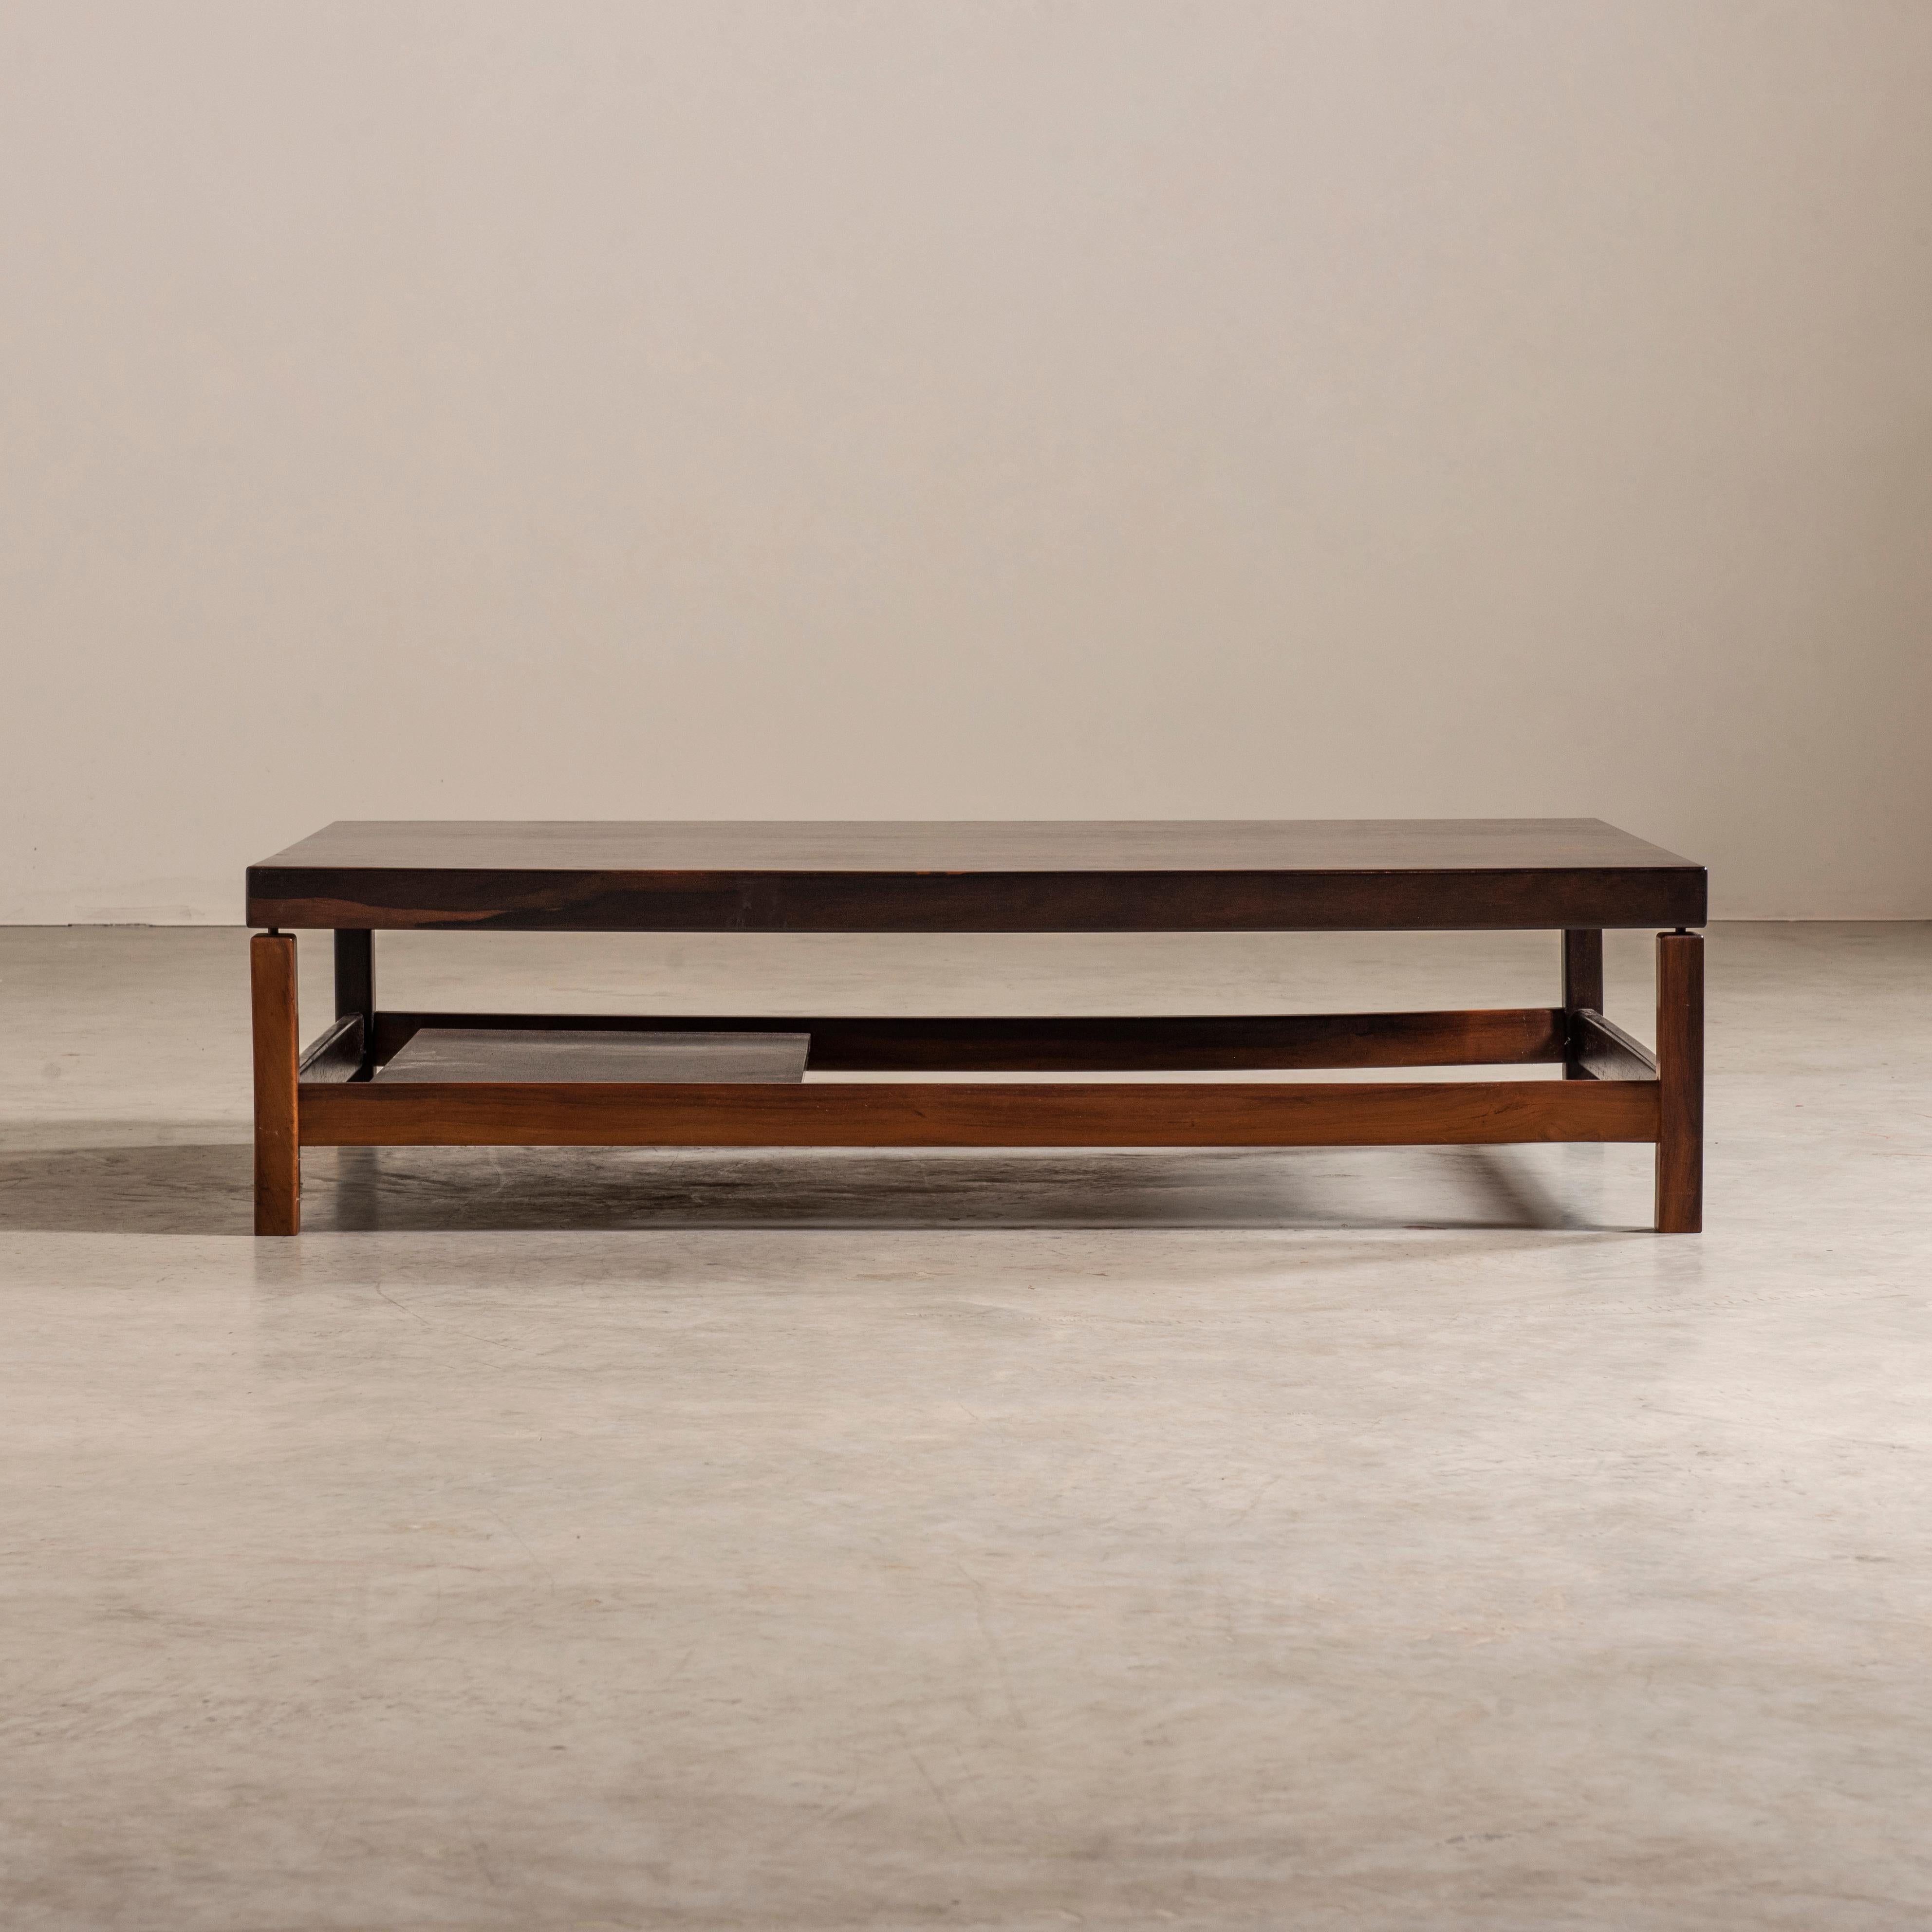 Minimalist Rectangular Coffee Table in Solid Wood, Brazilian Mid-century Modern  For Sale 2